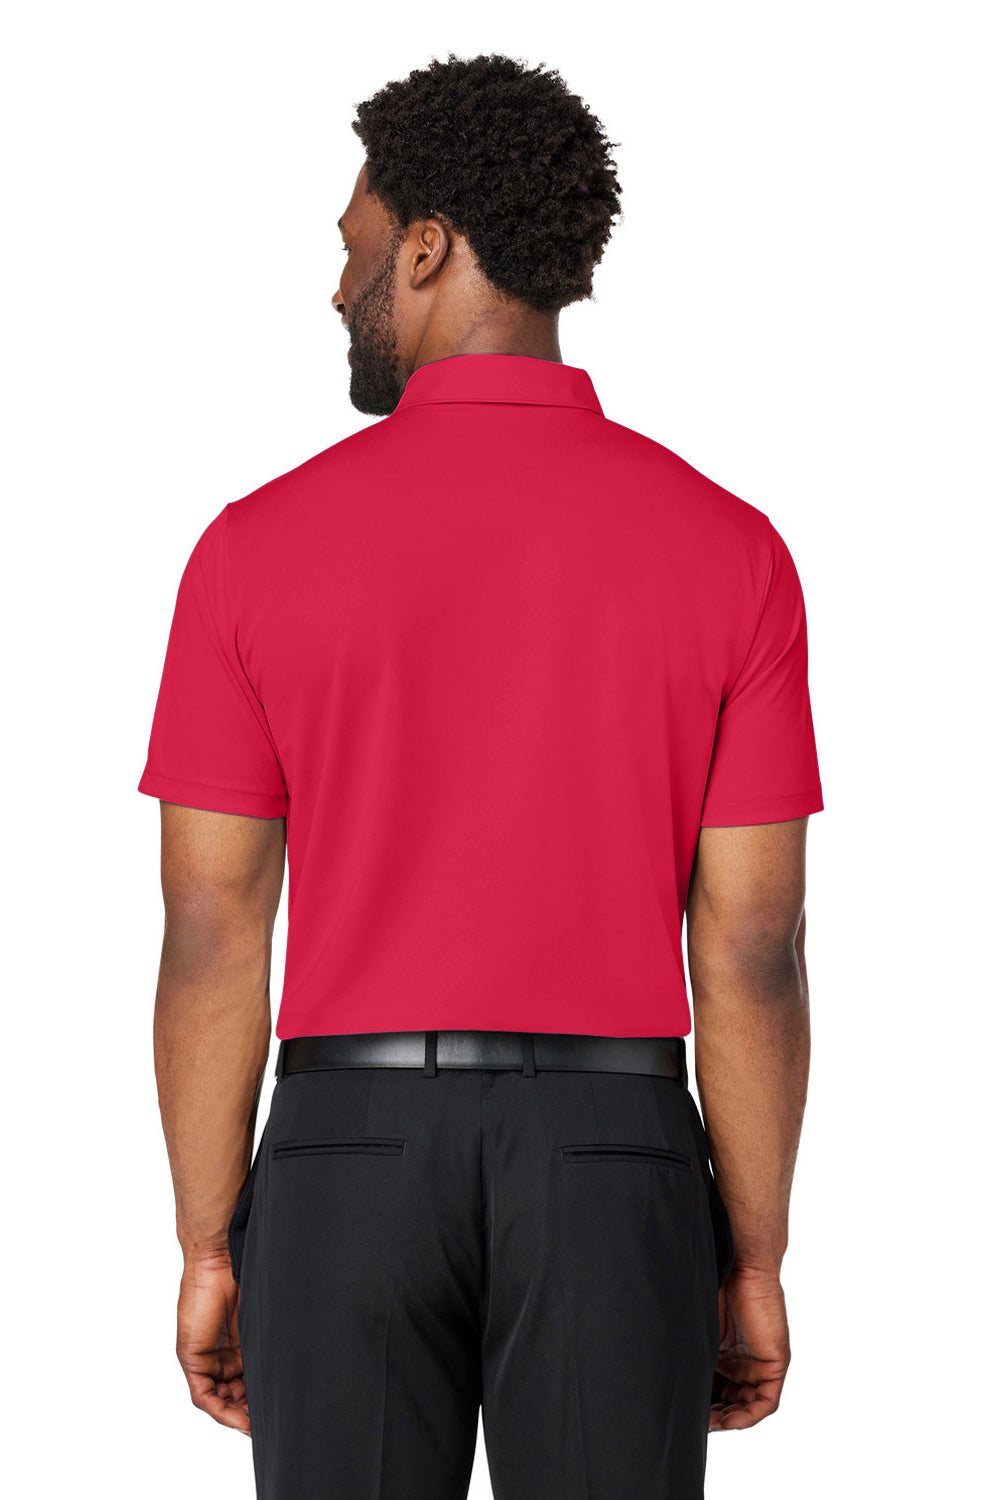 Puma 599120 Mens Gamer Short Sleeve Polo Shirt Ski Patrol Red Back